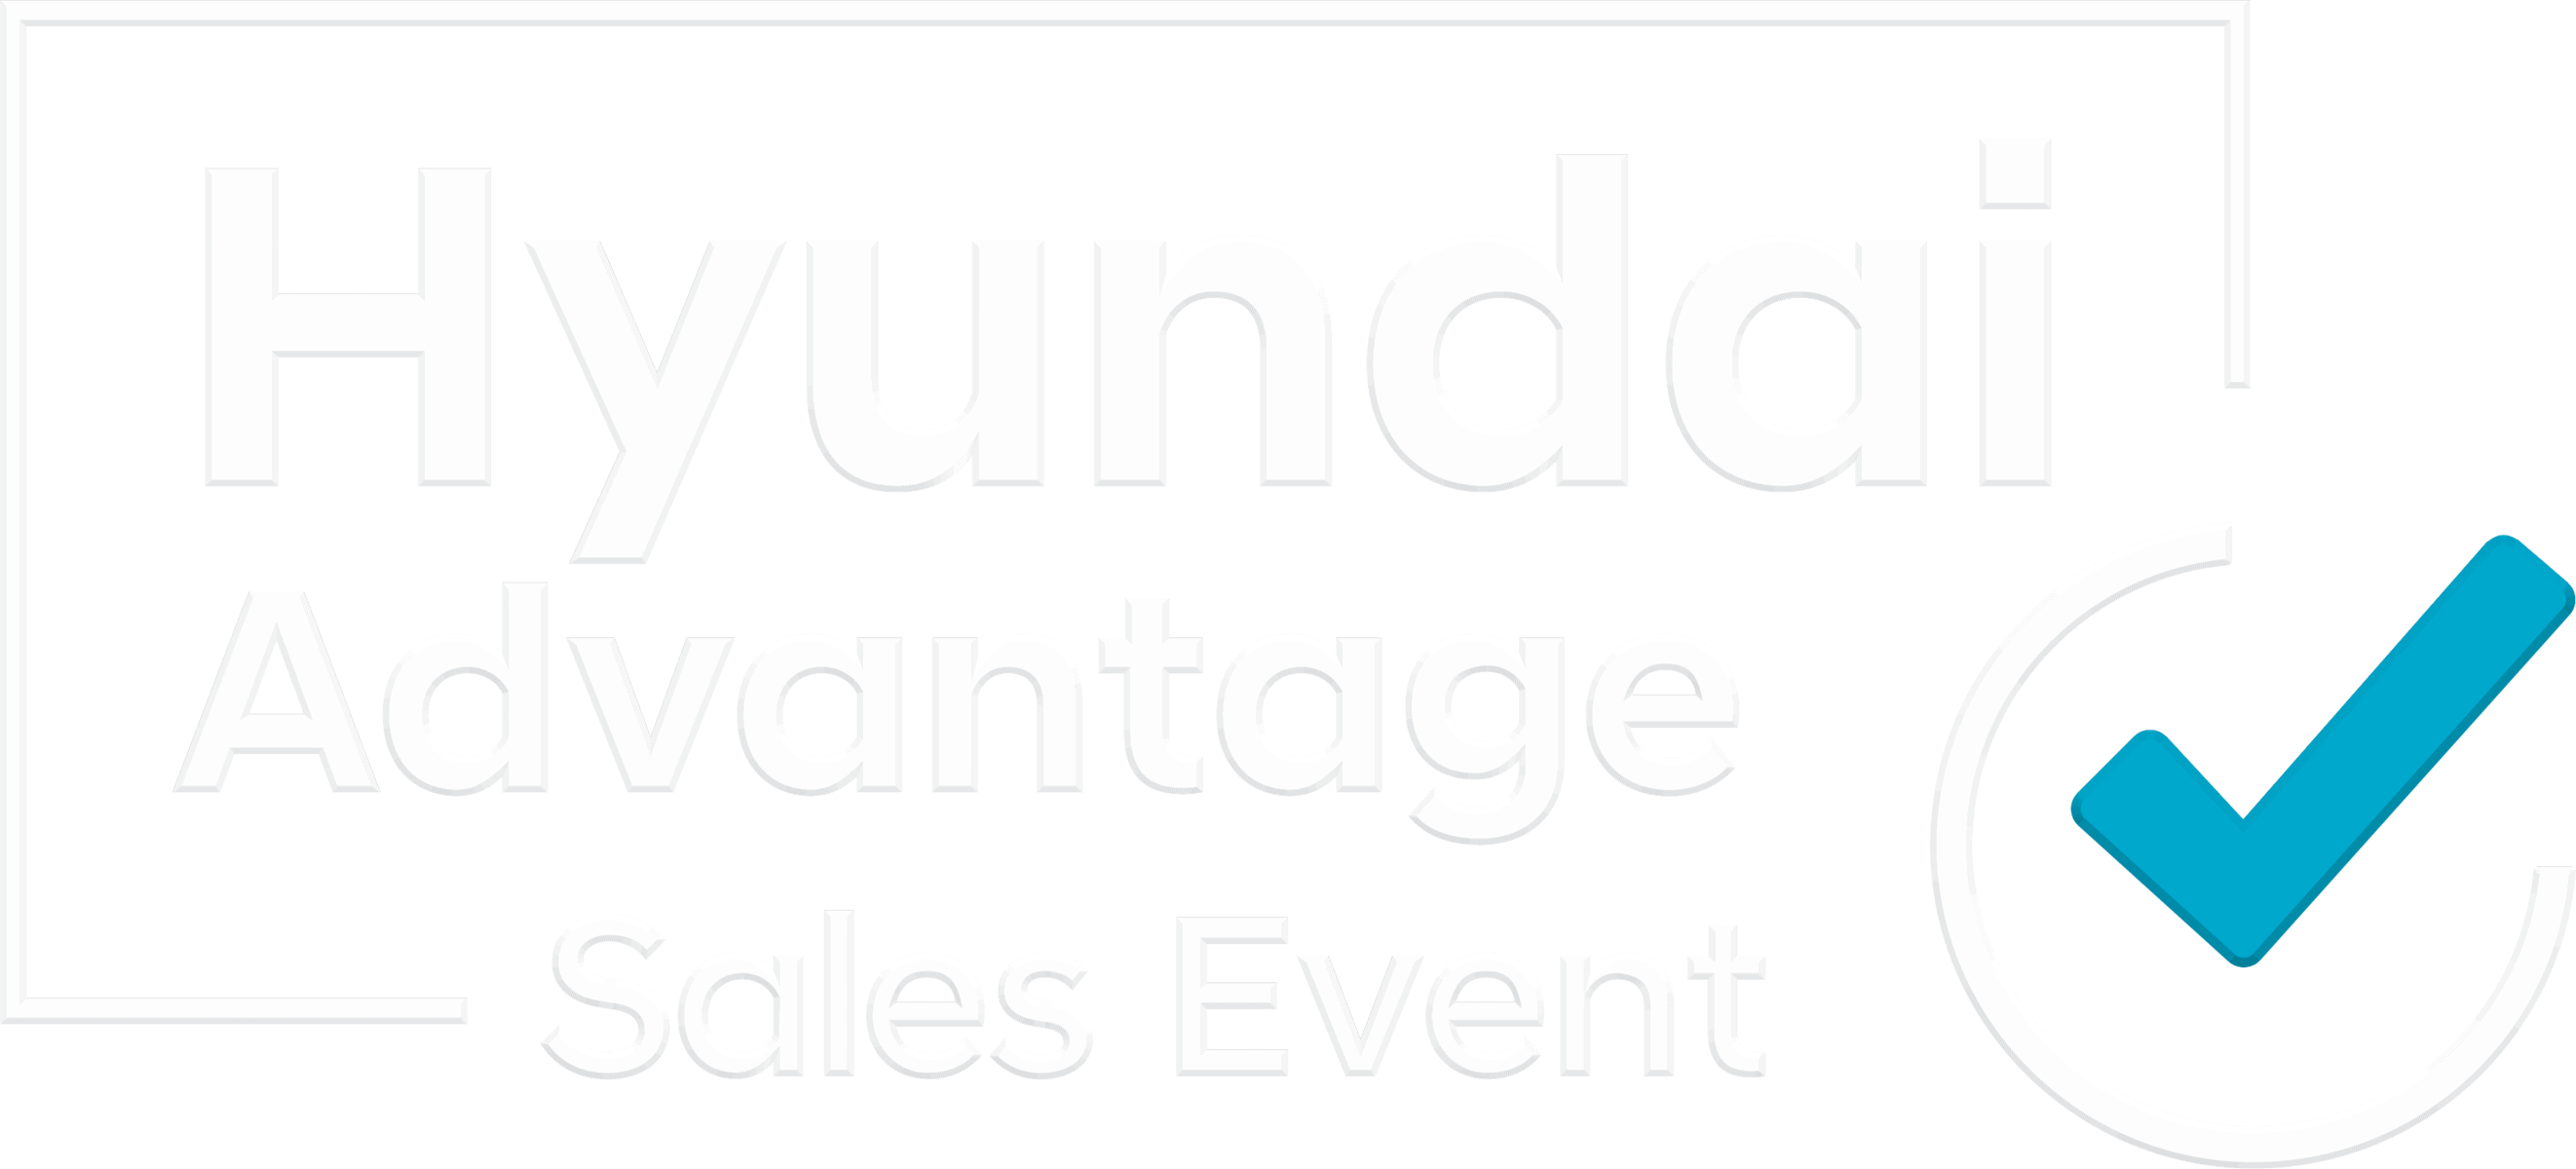 Hyundai Advantage Sales Event